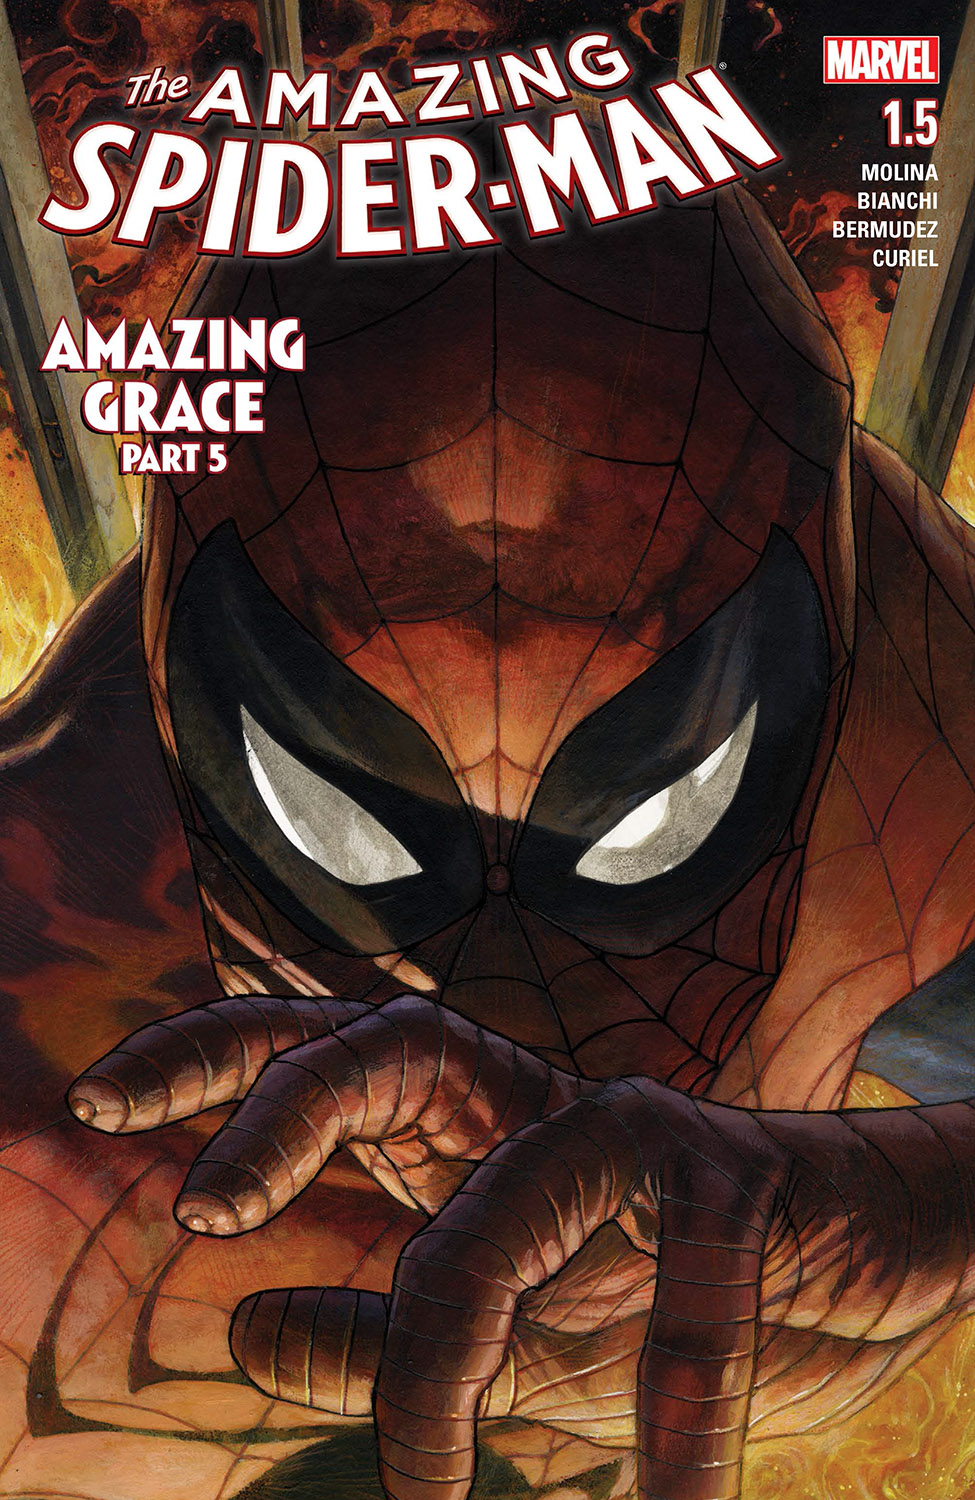 The Amazing Spider-Man (2017) #1.5